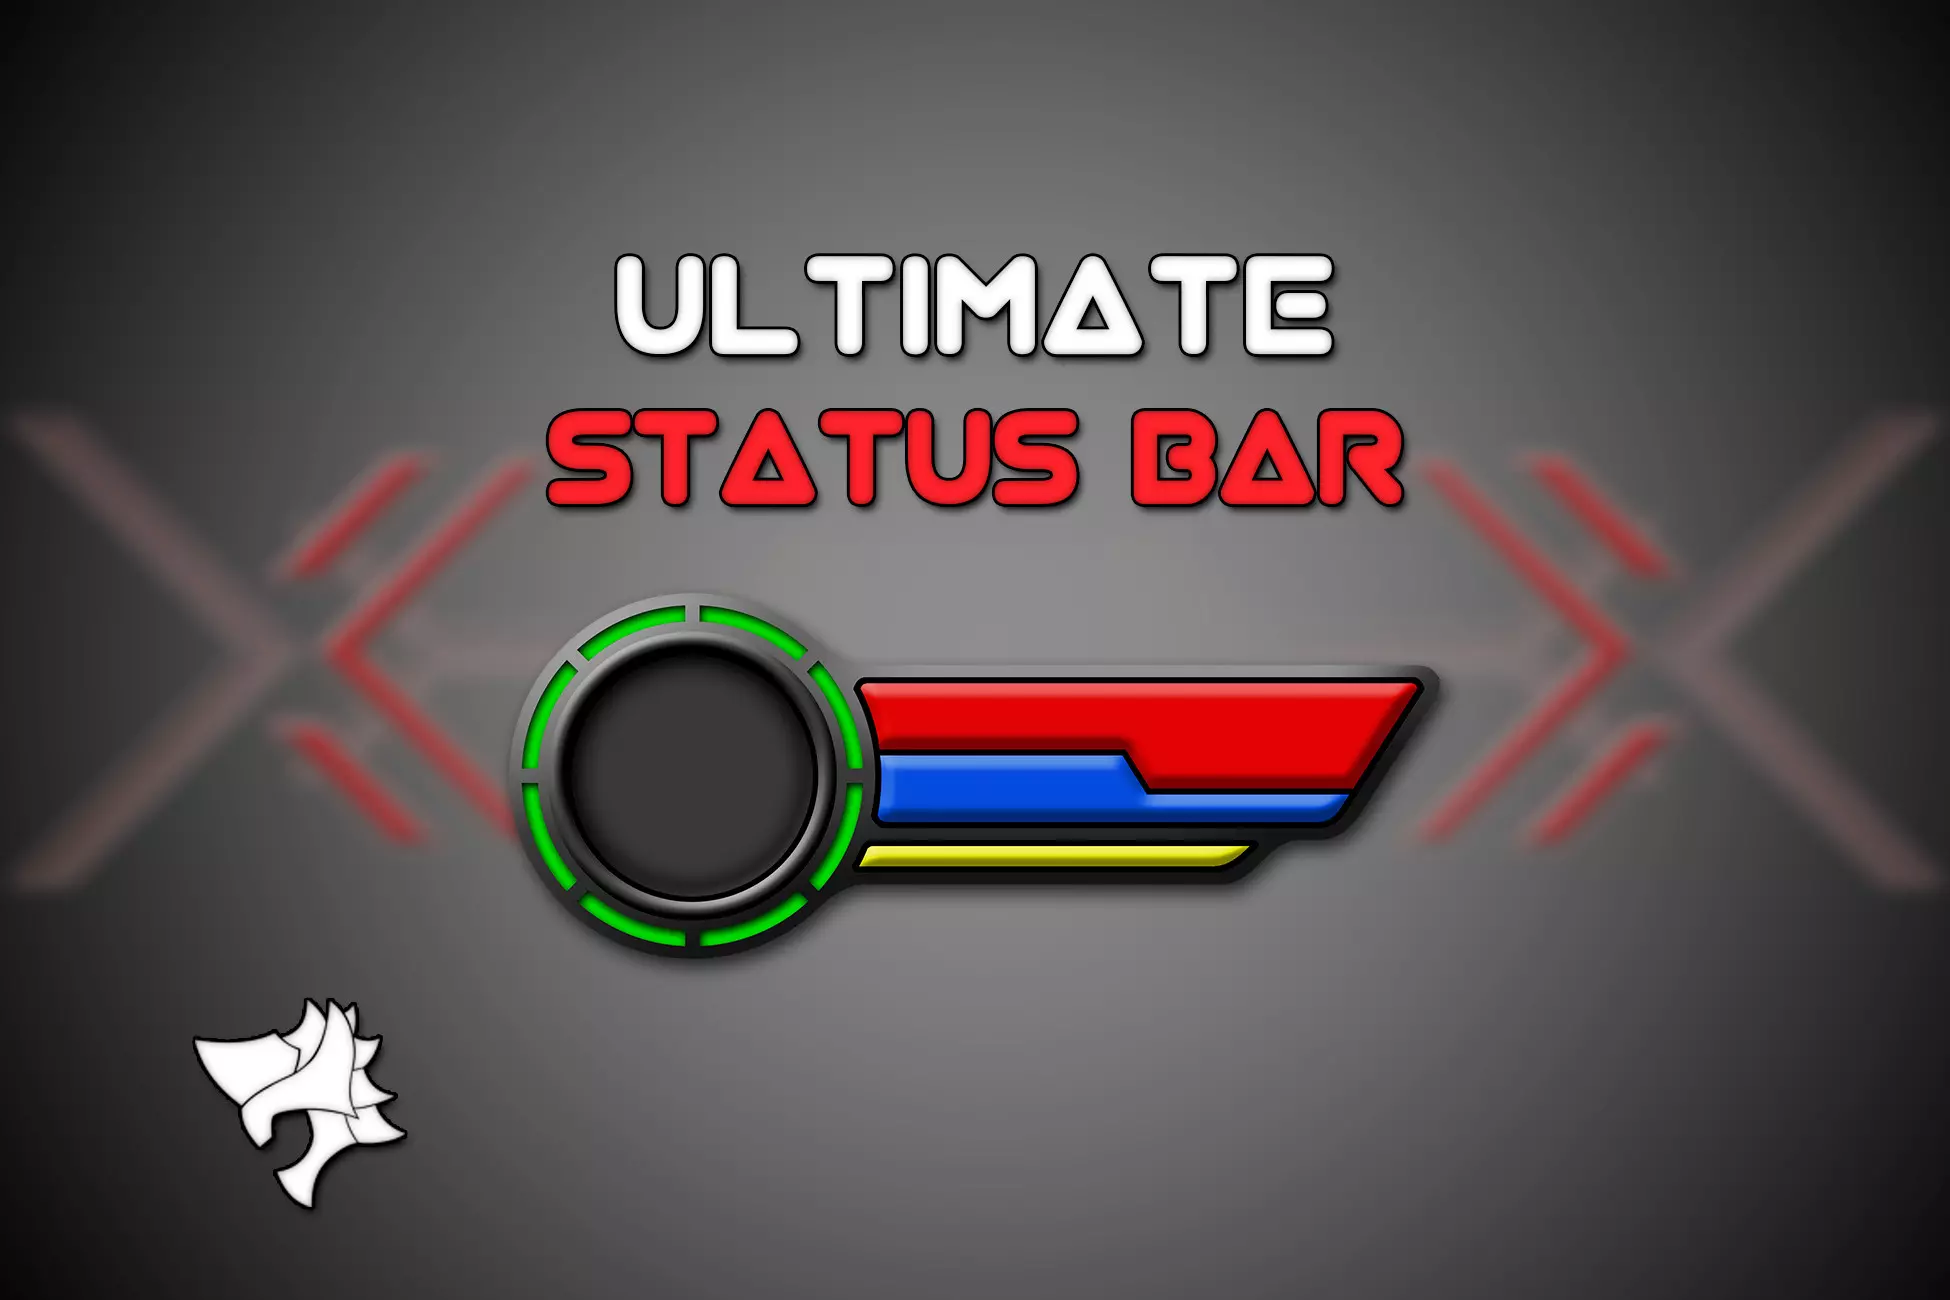 Unity Asset Ultimate Status Bar free download